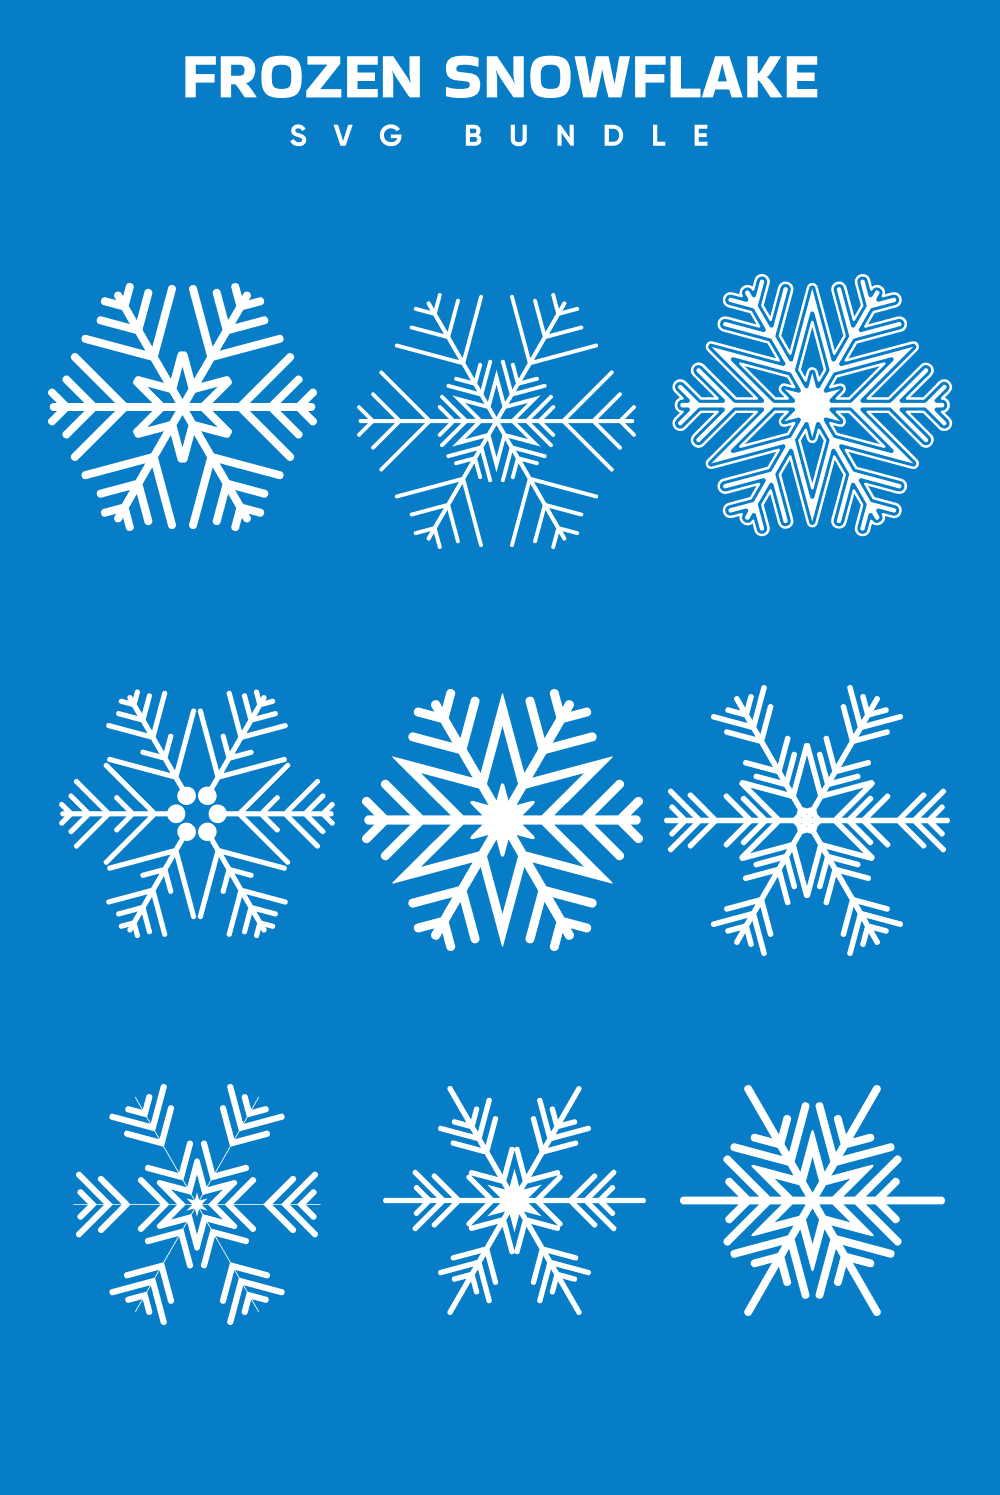 Frozen Snowflake SVG - pinterest image preview.